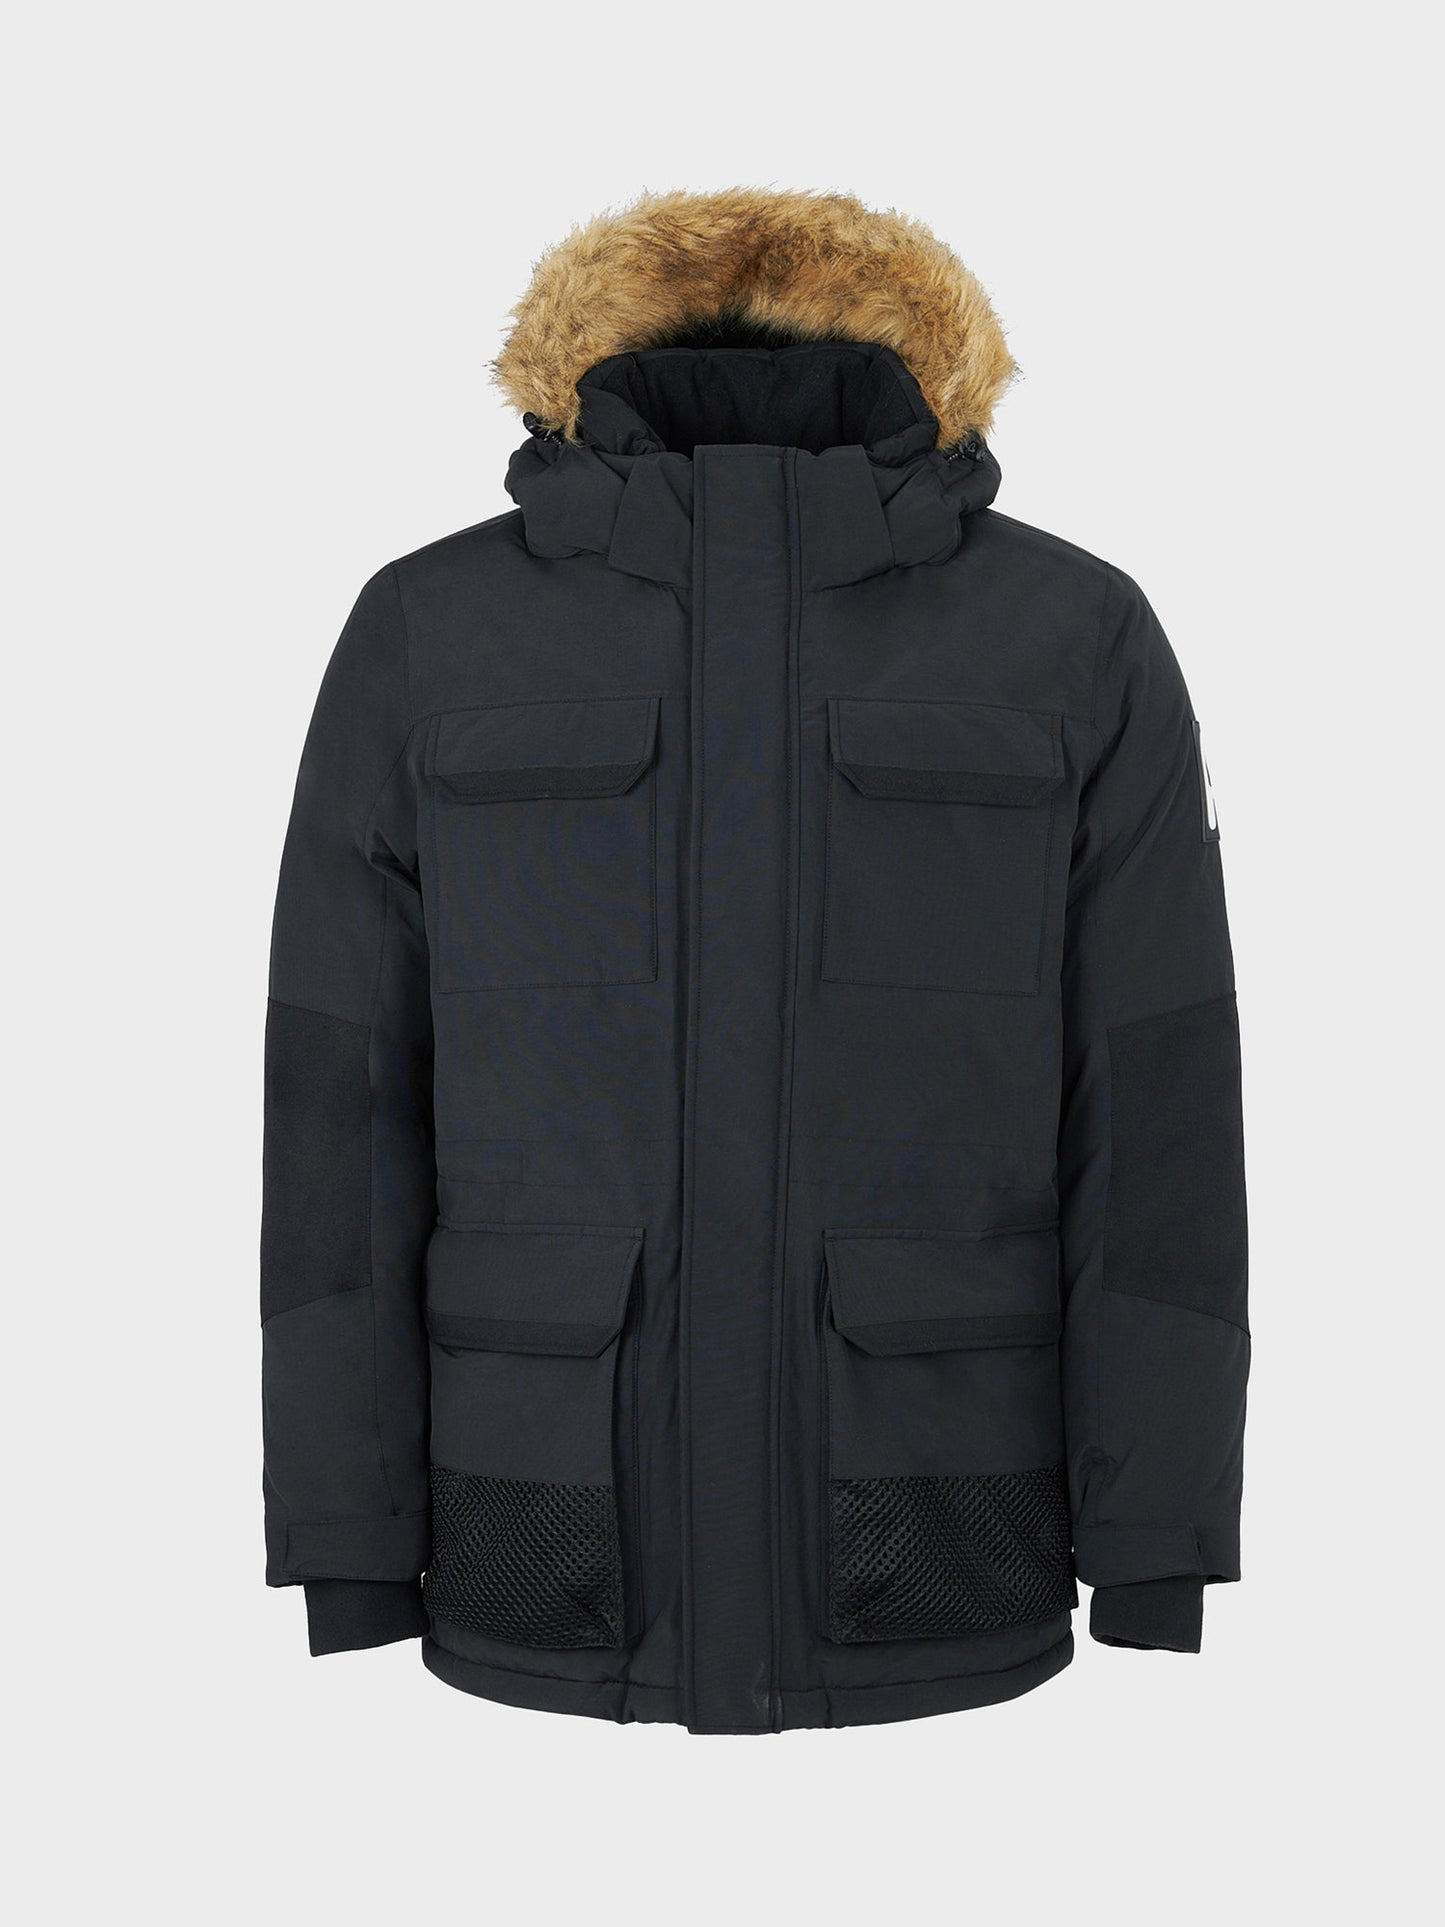 Ultimate Winter Parka Jacket in Black